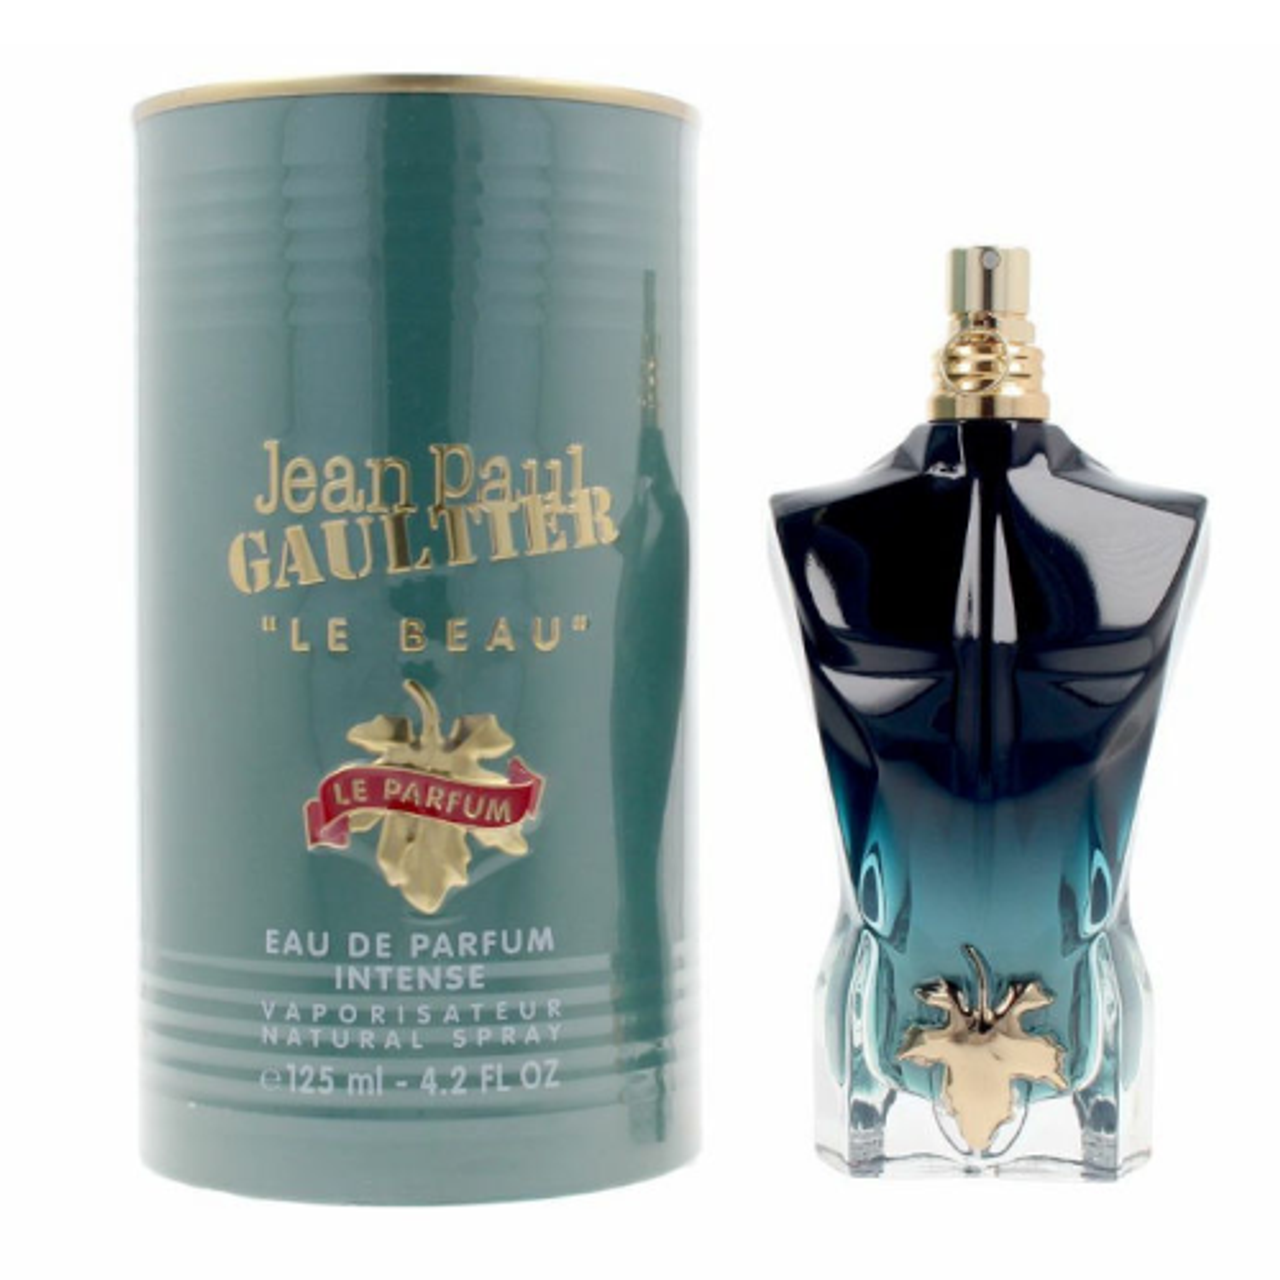 Jean Paul Gaultier Le Beau Male Le Parfum Eau de Parfum Intense 7ml GWP  Jean Paul Gaultier - Fragrances from Direct Cosmetics UK